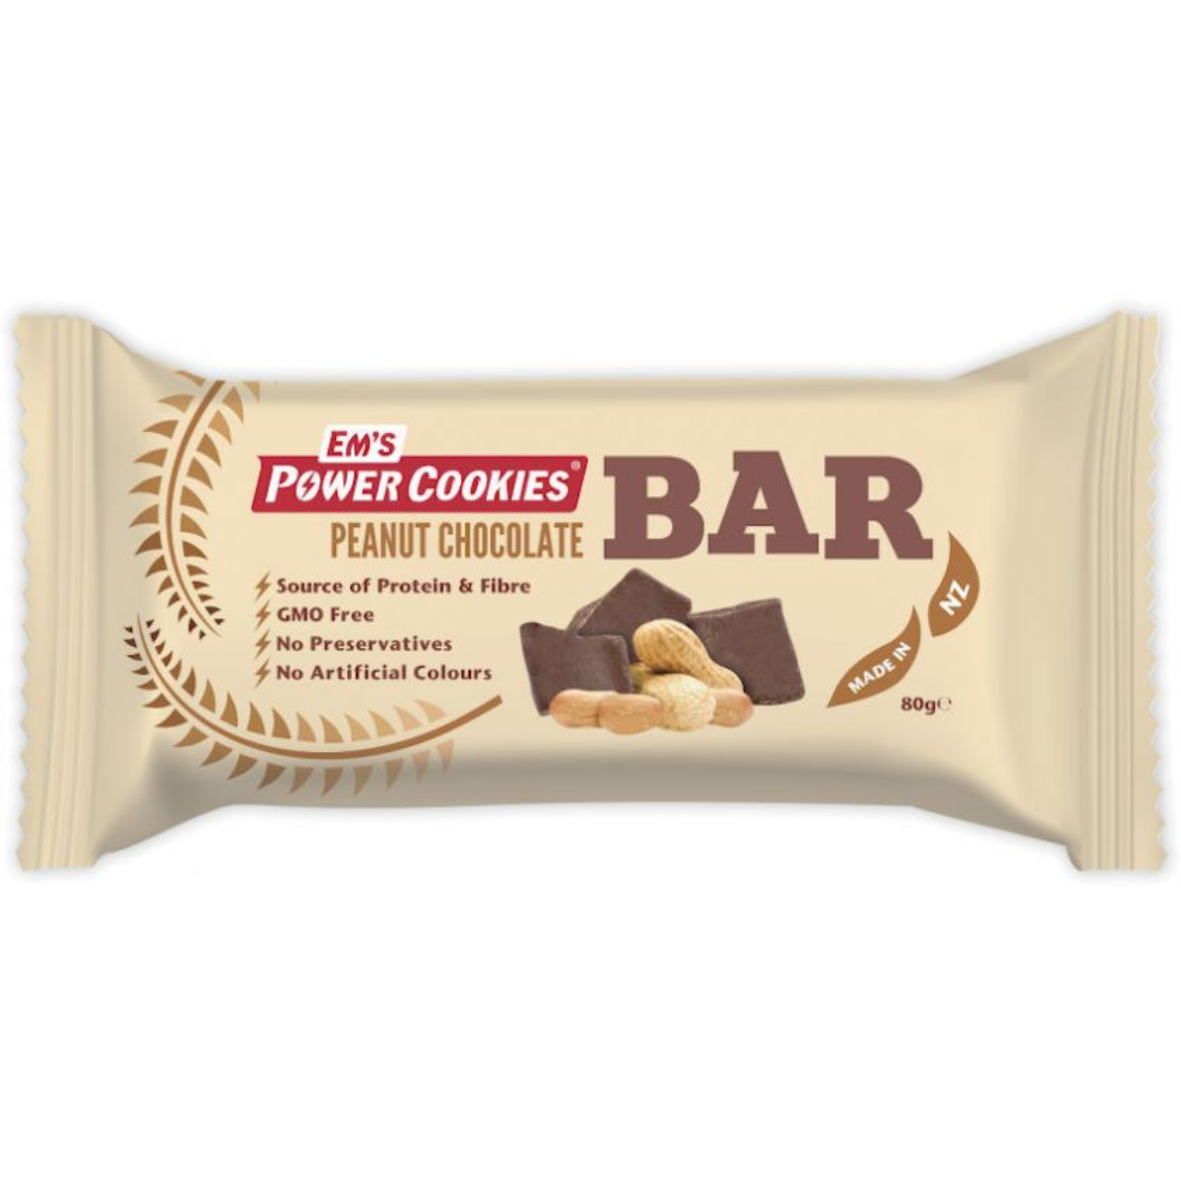 Em's Power Cookies Peanut Chocolate Bar